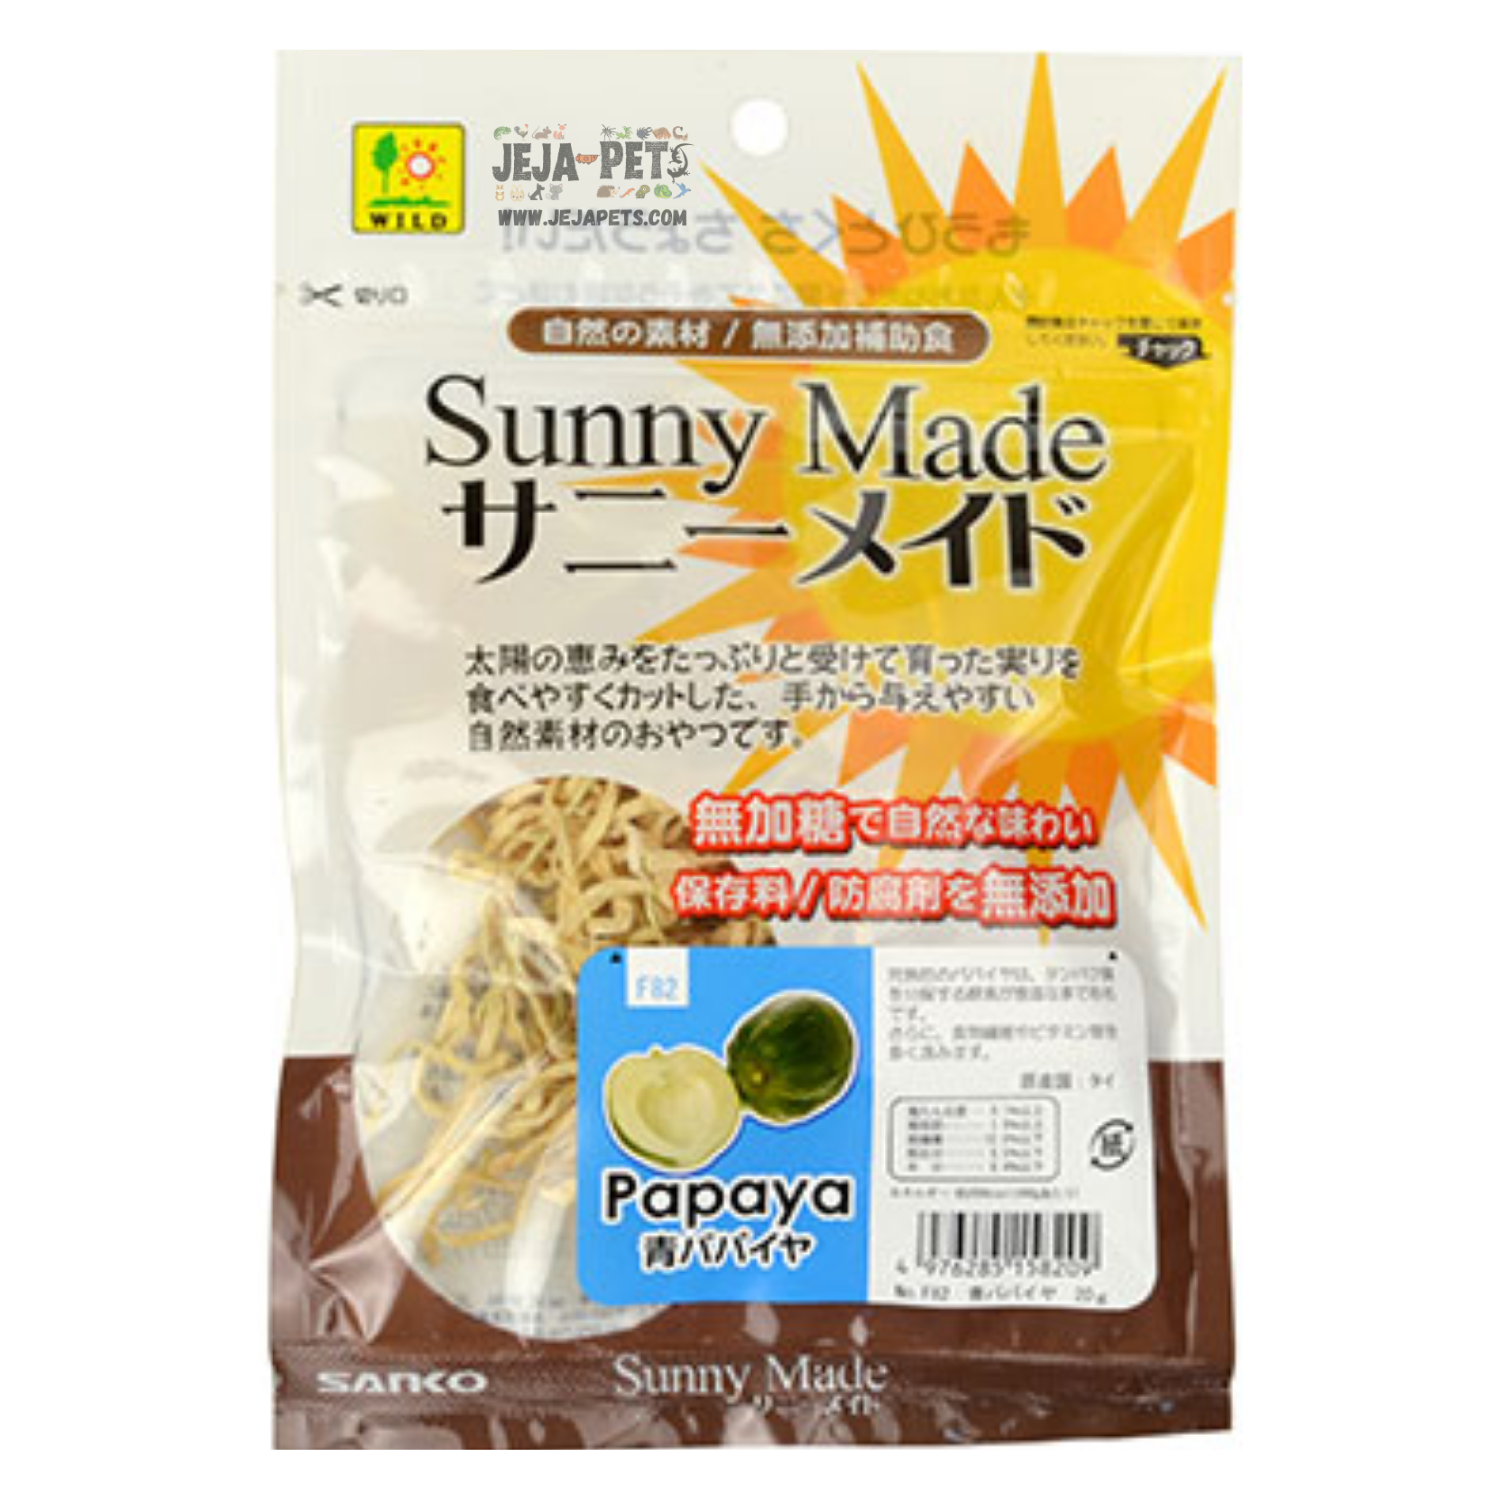 [DISCONTINUED] Sanko Wild Sunny Made Papaya - 20g